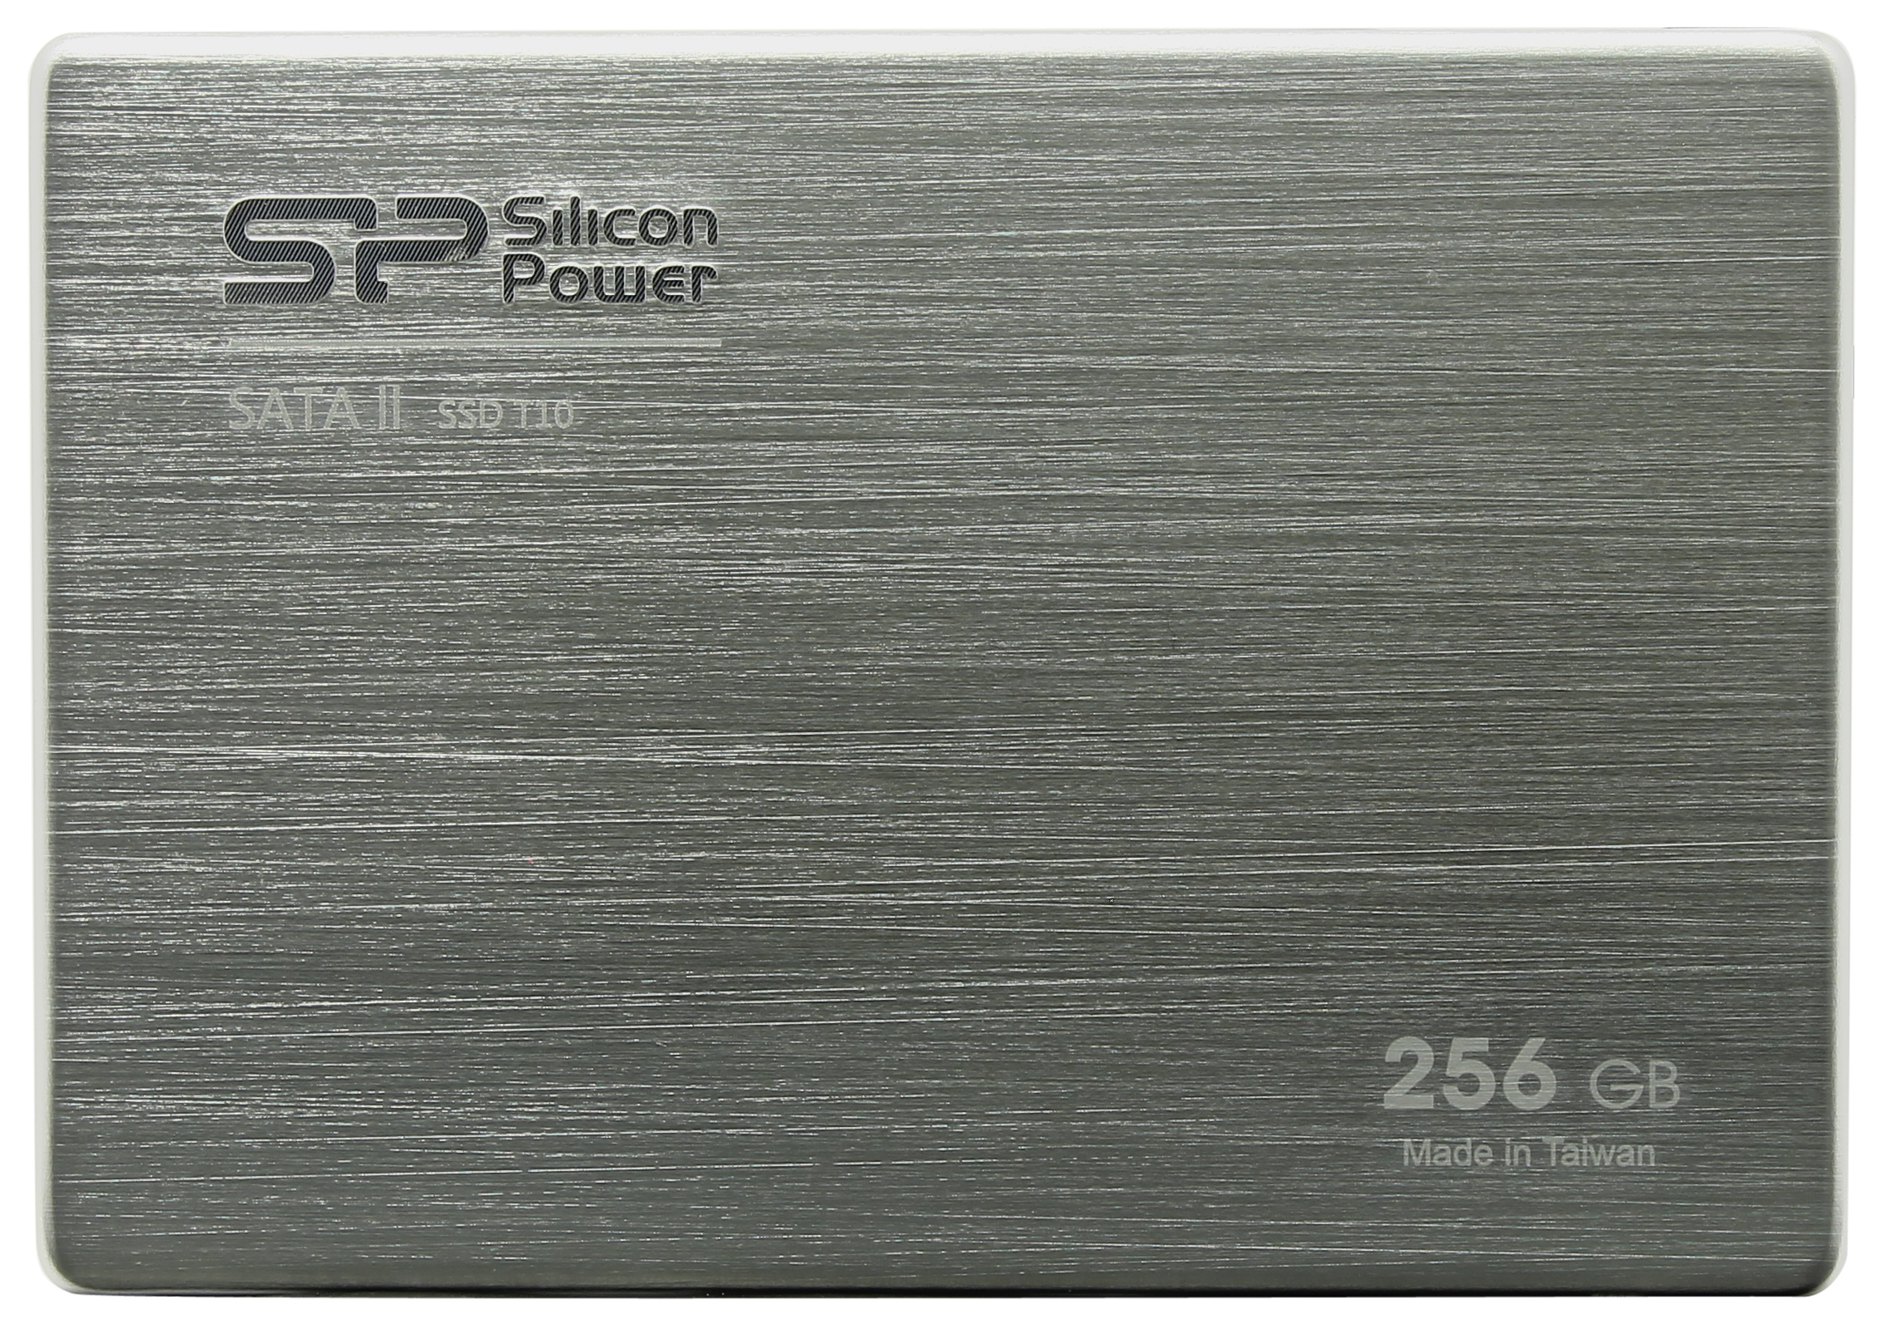 Техно пова 6 про 256 гб цена. SSD Silicon Power 256gb. Silicon Power ms70 256gb. Faster Fu-10 256gb. Технопарк 10 про 256 ГБ характеристики.